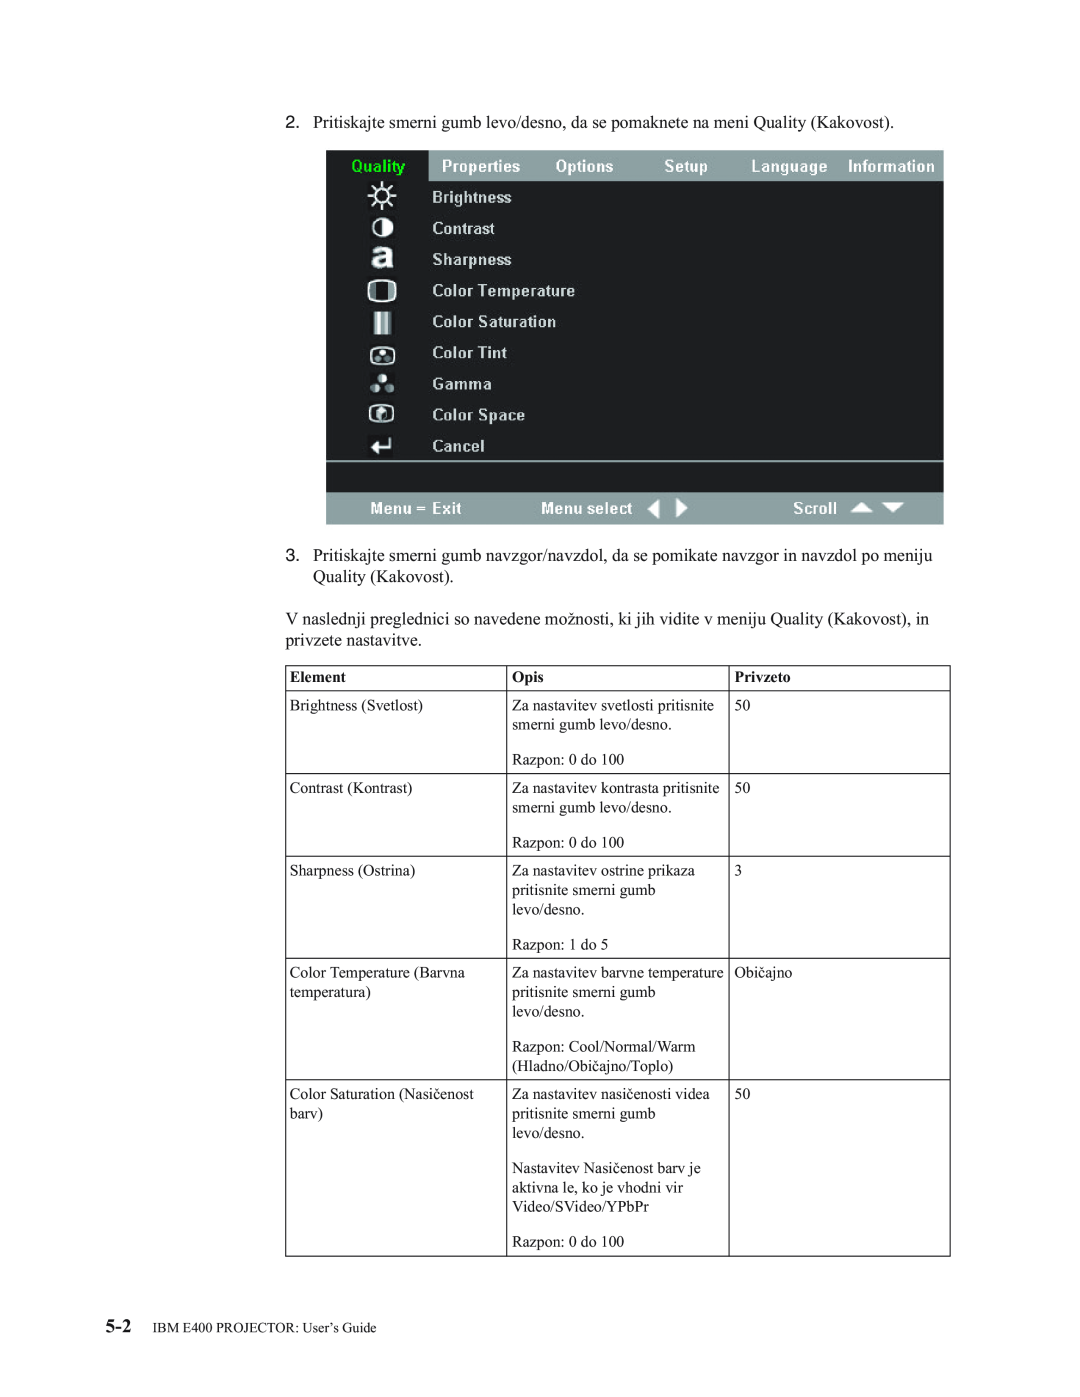 IBM manual Element, Opis, Privzeto, IBM E400 PROJECTOR User’s Guide 